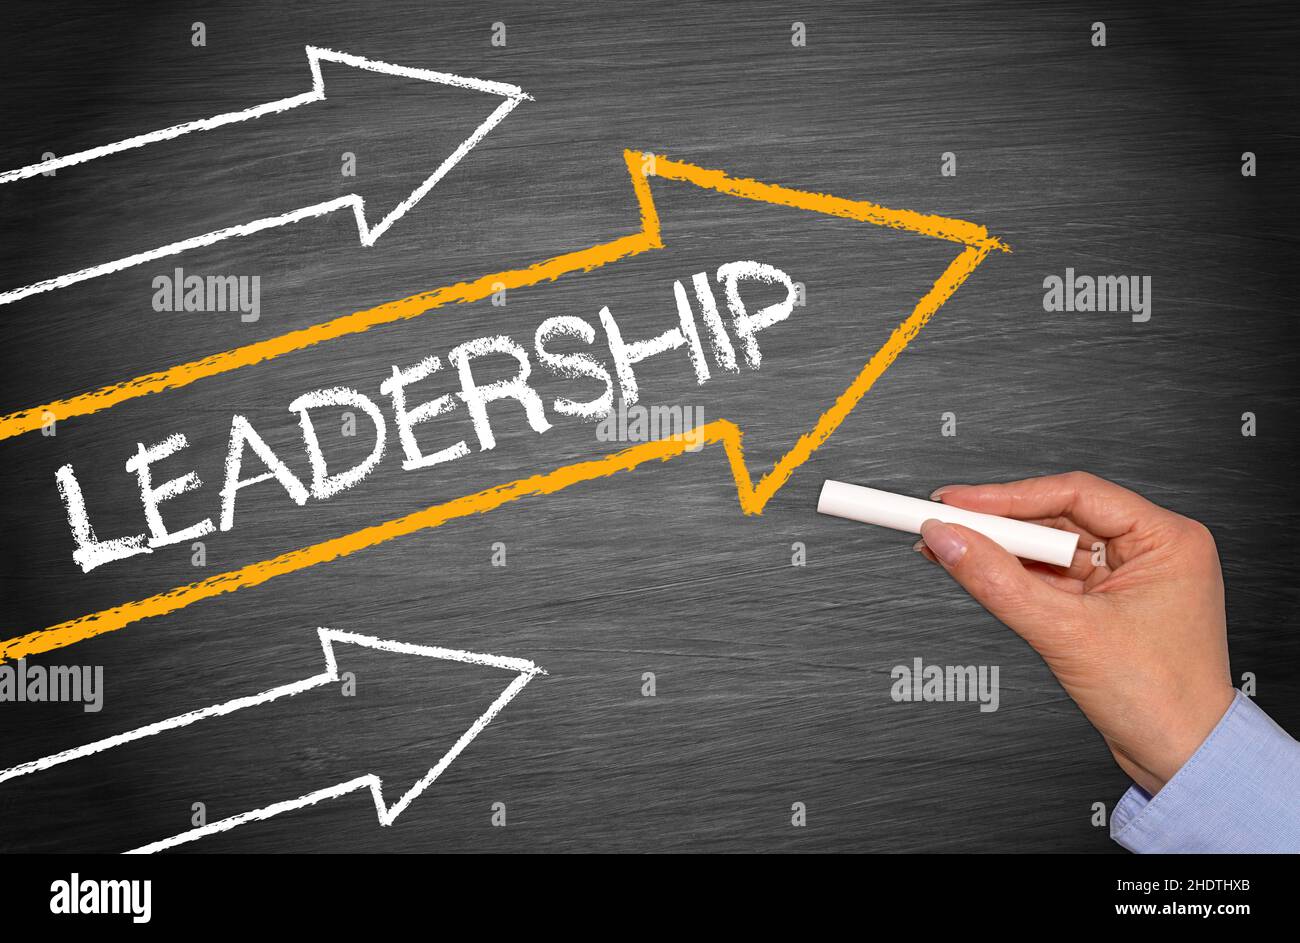 leadership, leaderships Stock Photo